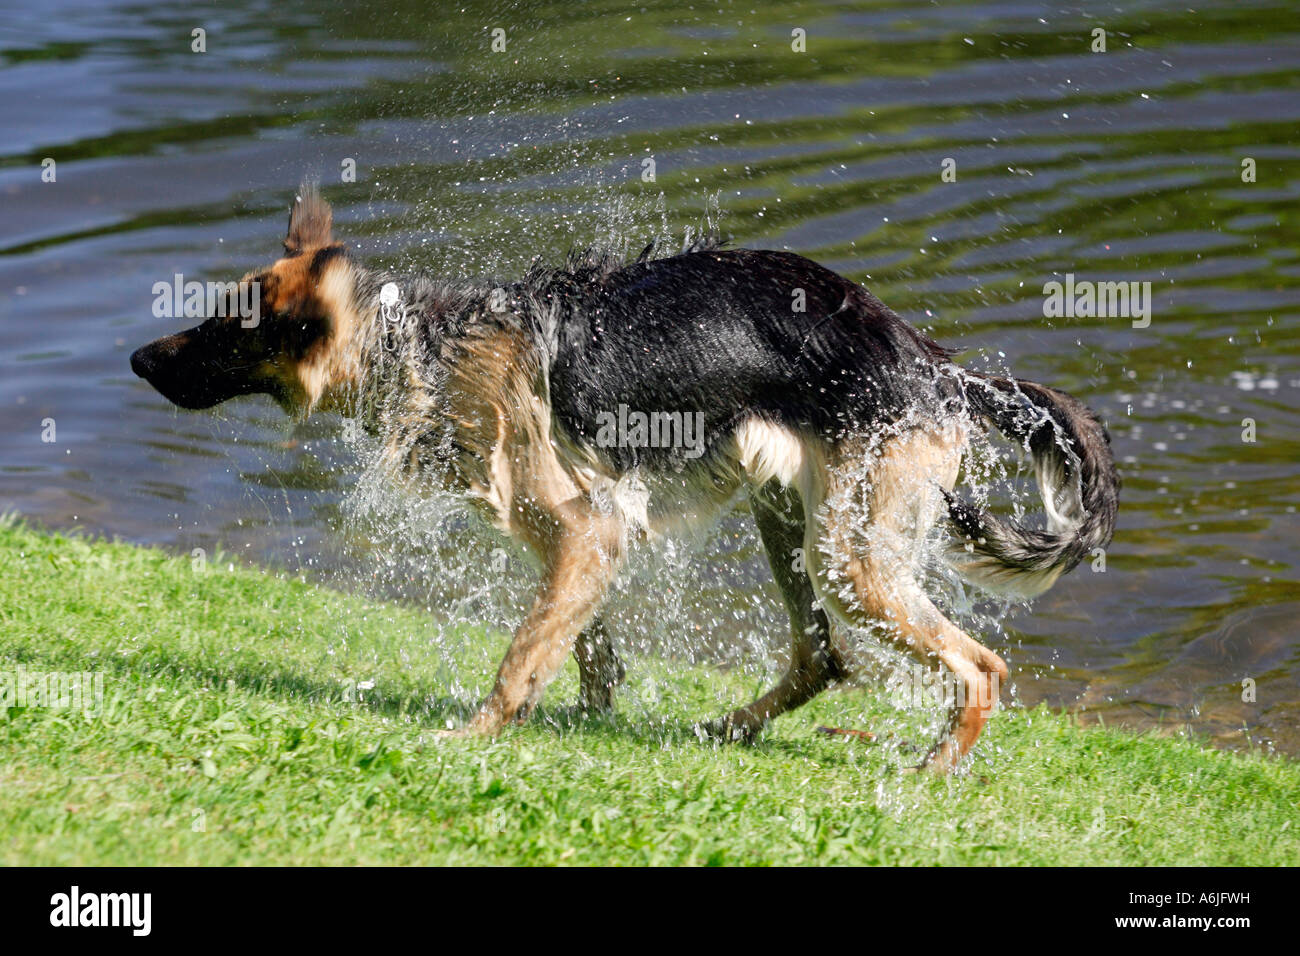 A German shepherd dog shaking water from itself Stock Photo